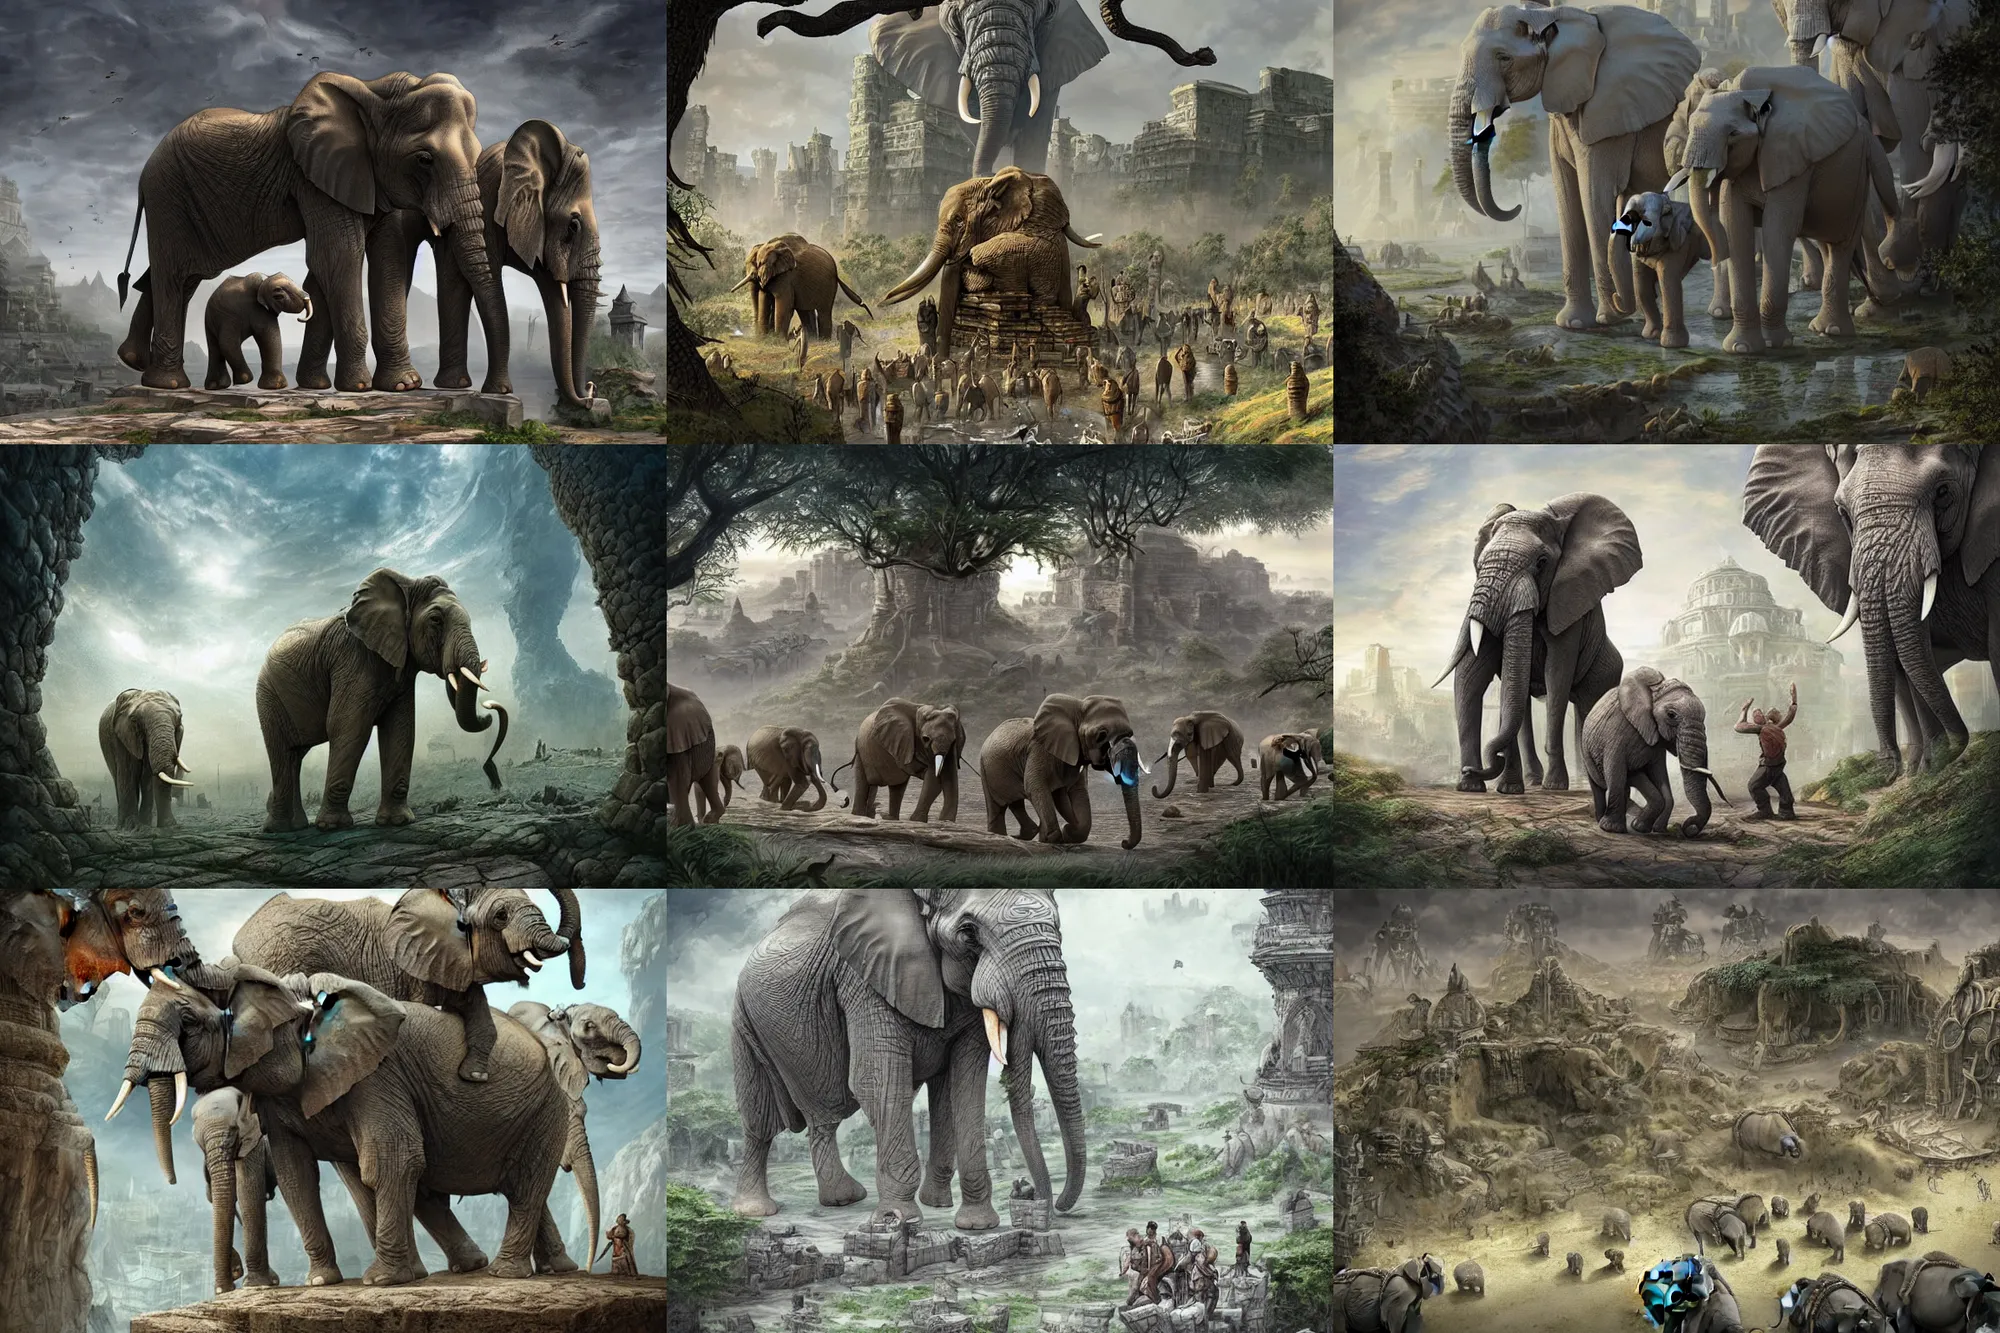 Prompt: civilization of ( elephants ), a city!! made of stone and woods made by ( elephants for elephants ), epic fantasy sci fi illustration